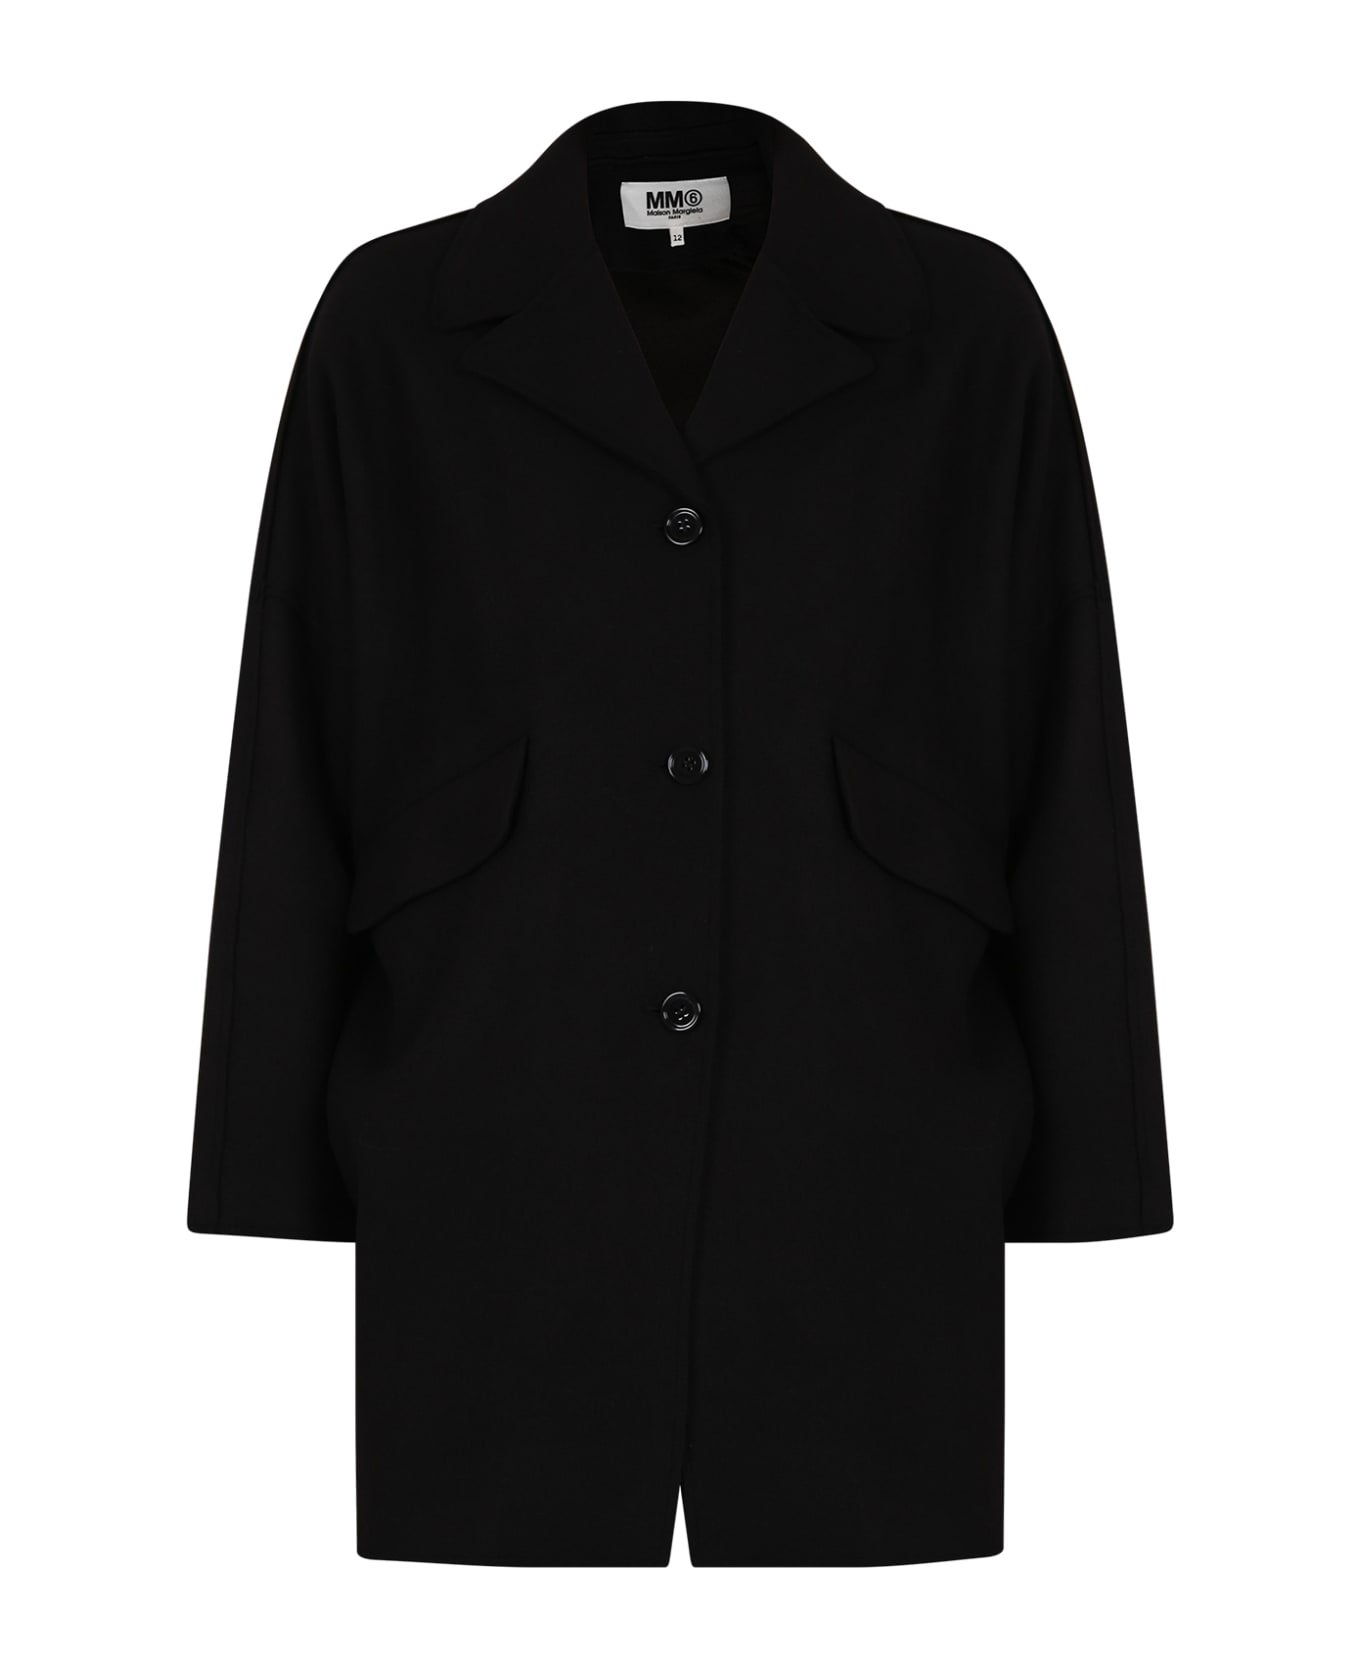 MM6 Maison Margiela Black Coat For Girl With Logo - M6900